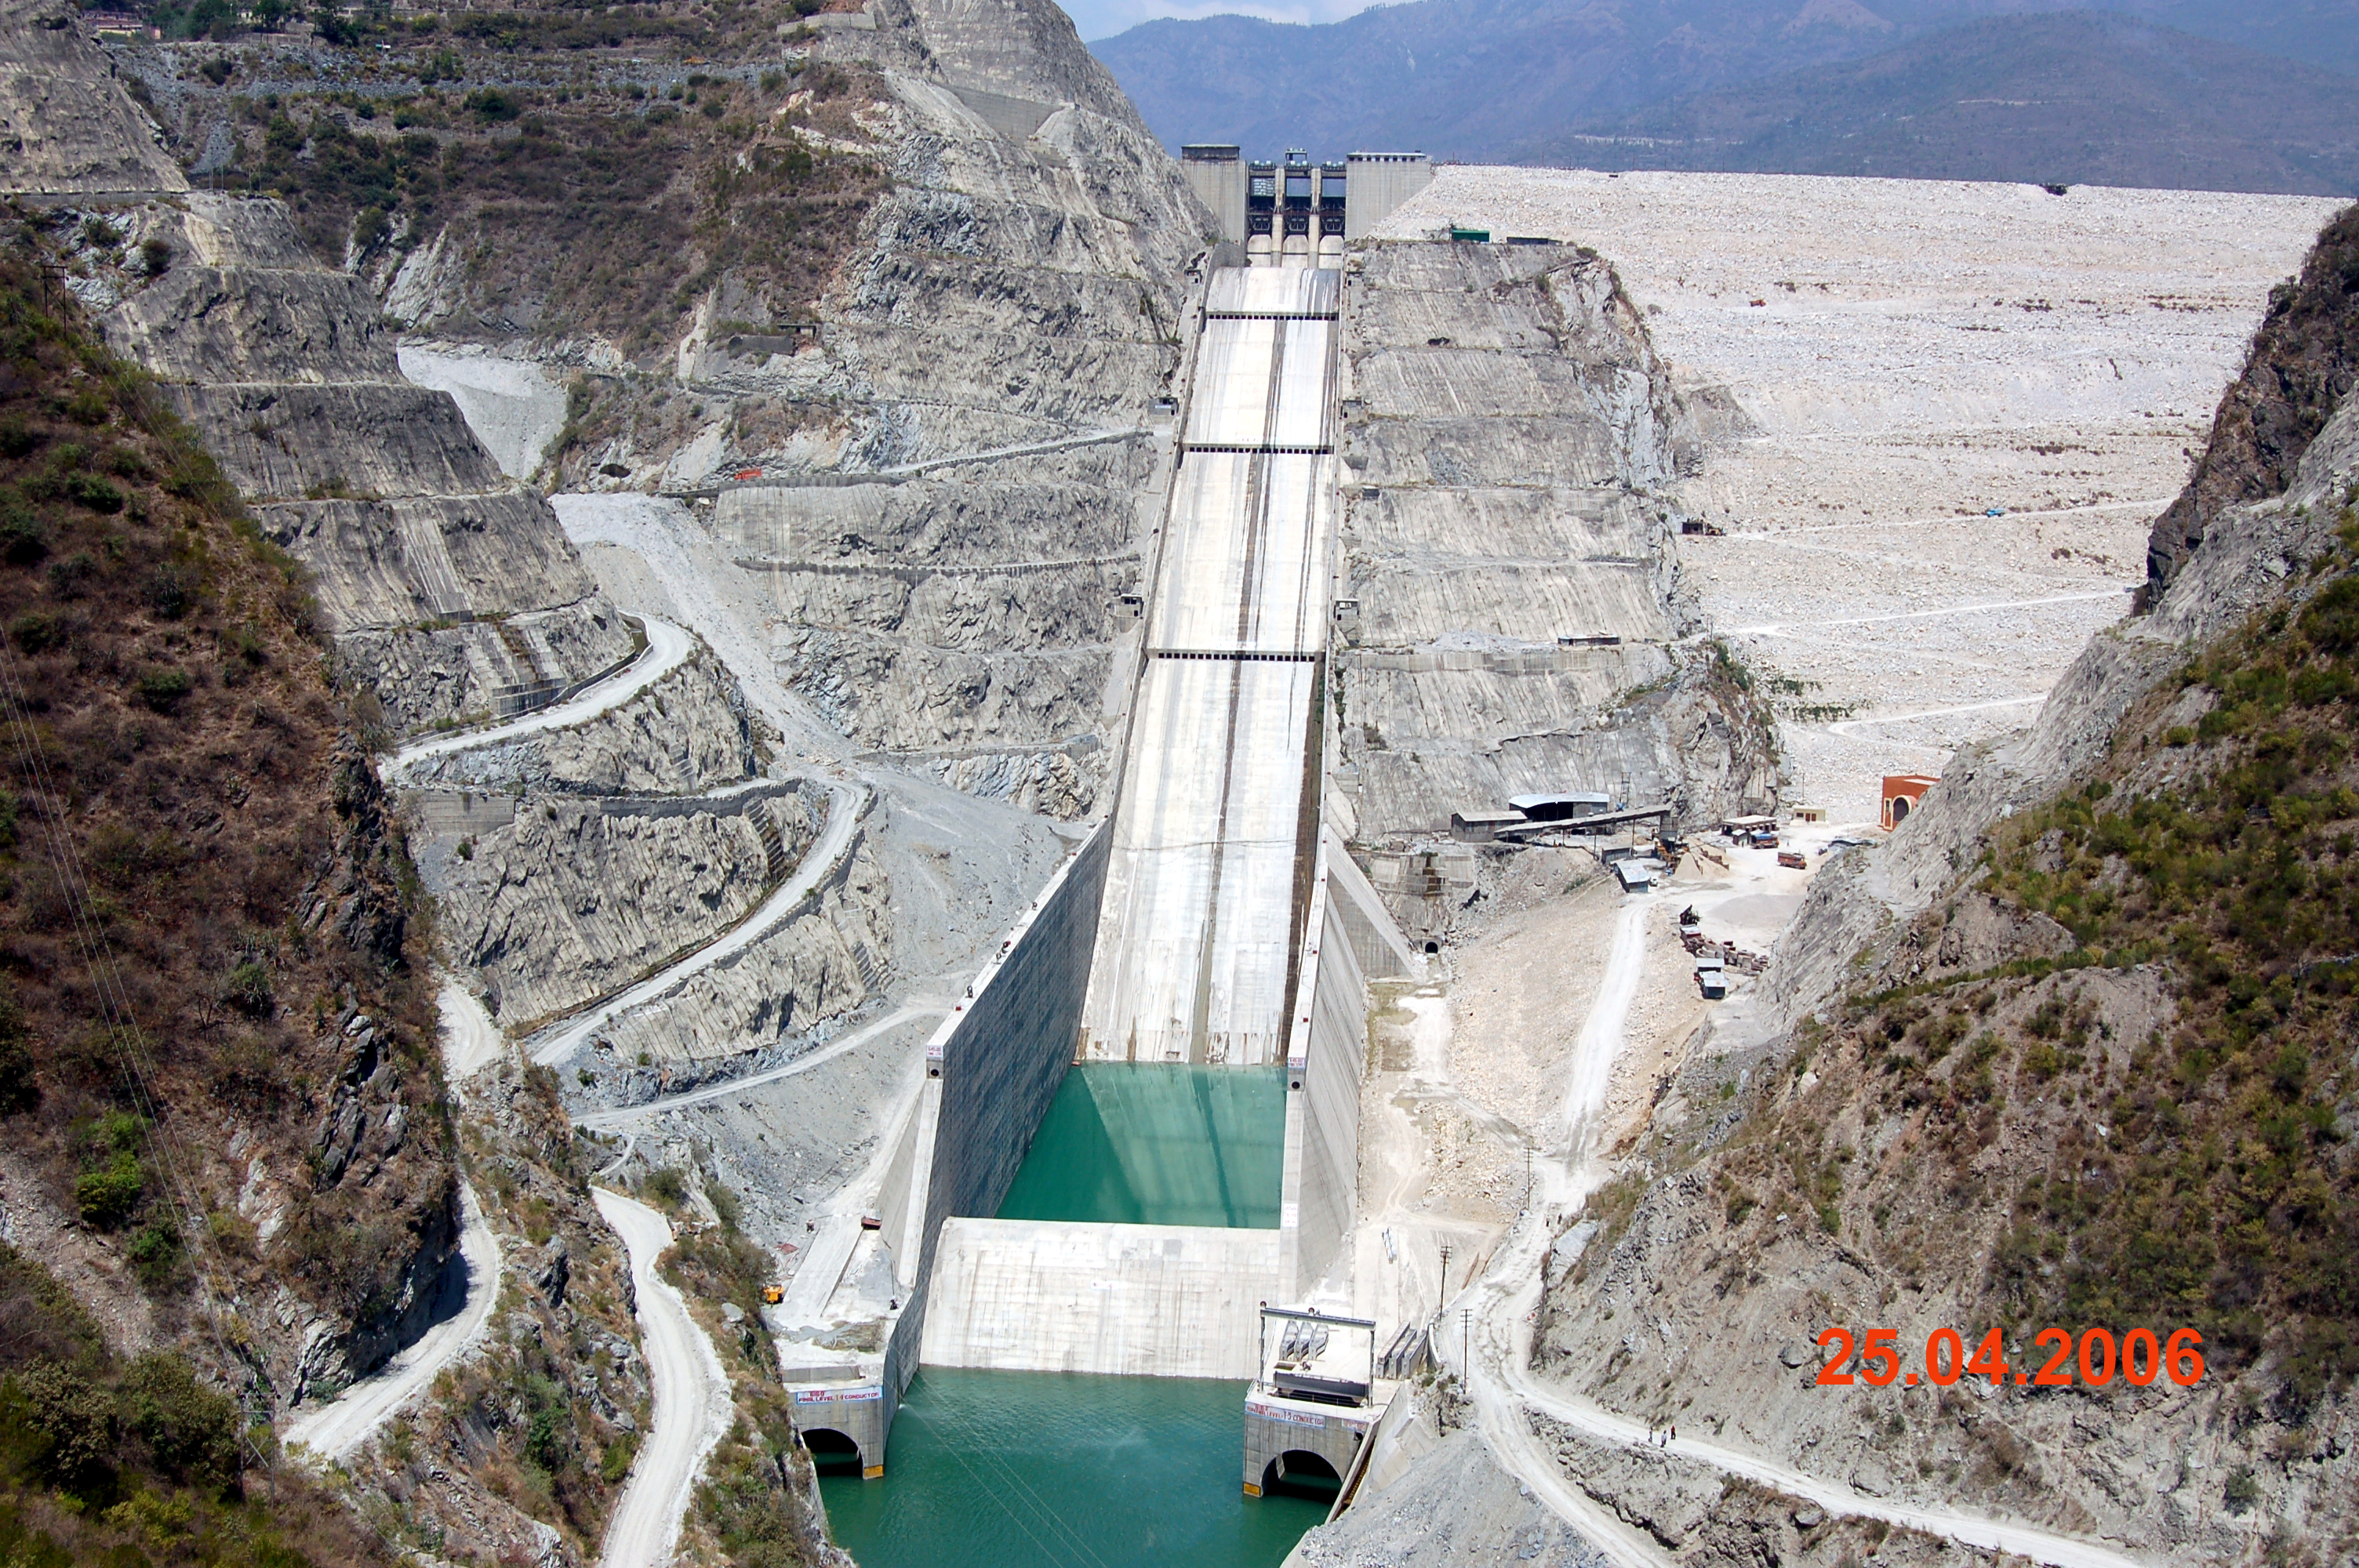 Tehri Dam in Uttarakhand, India